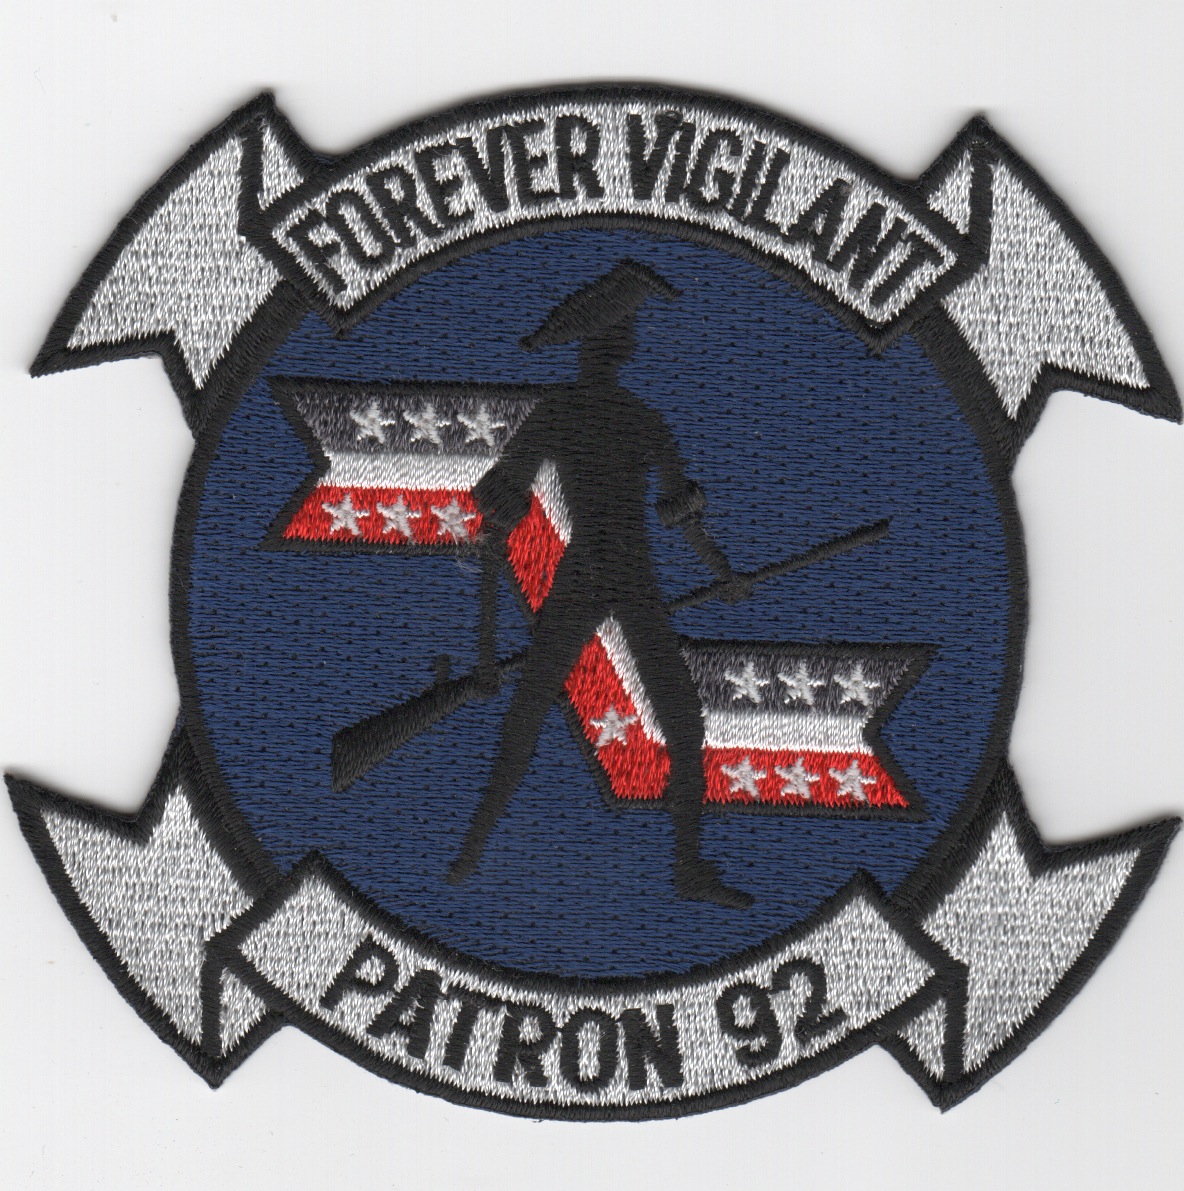 VP-92 'Forever Vigilant' Patch